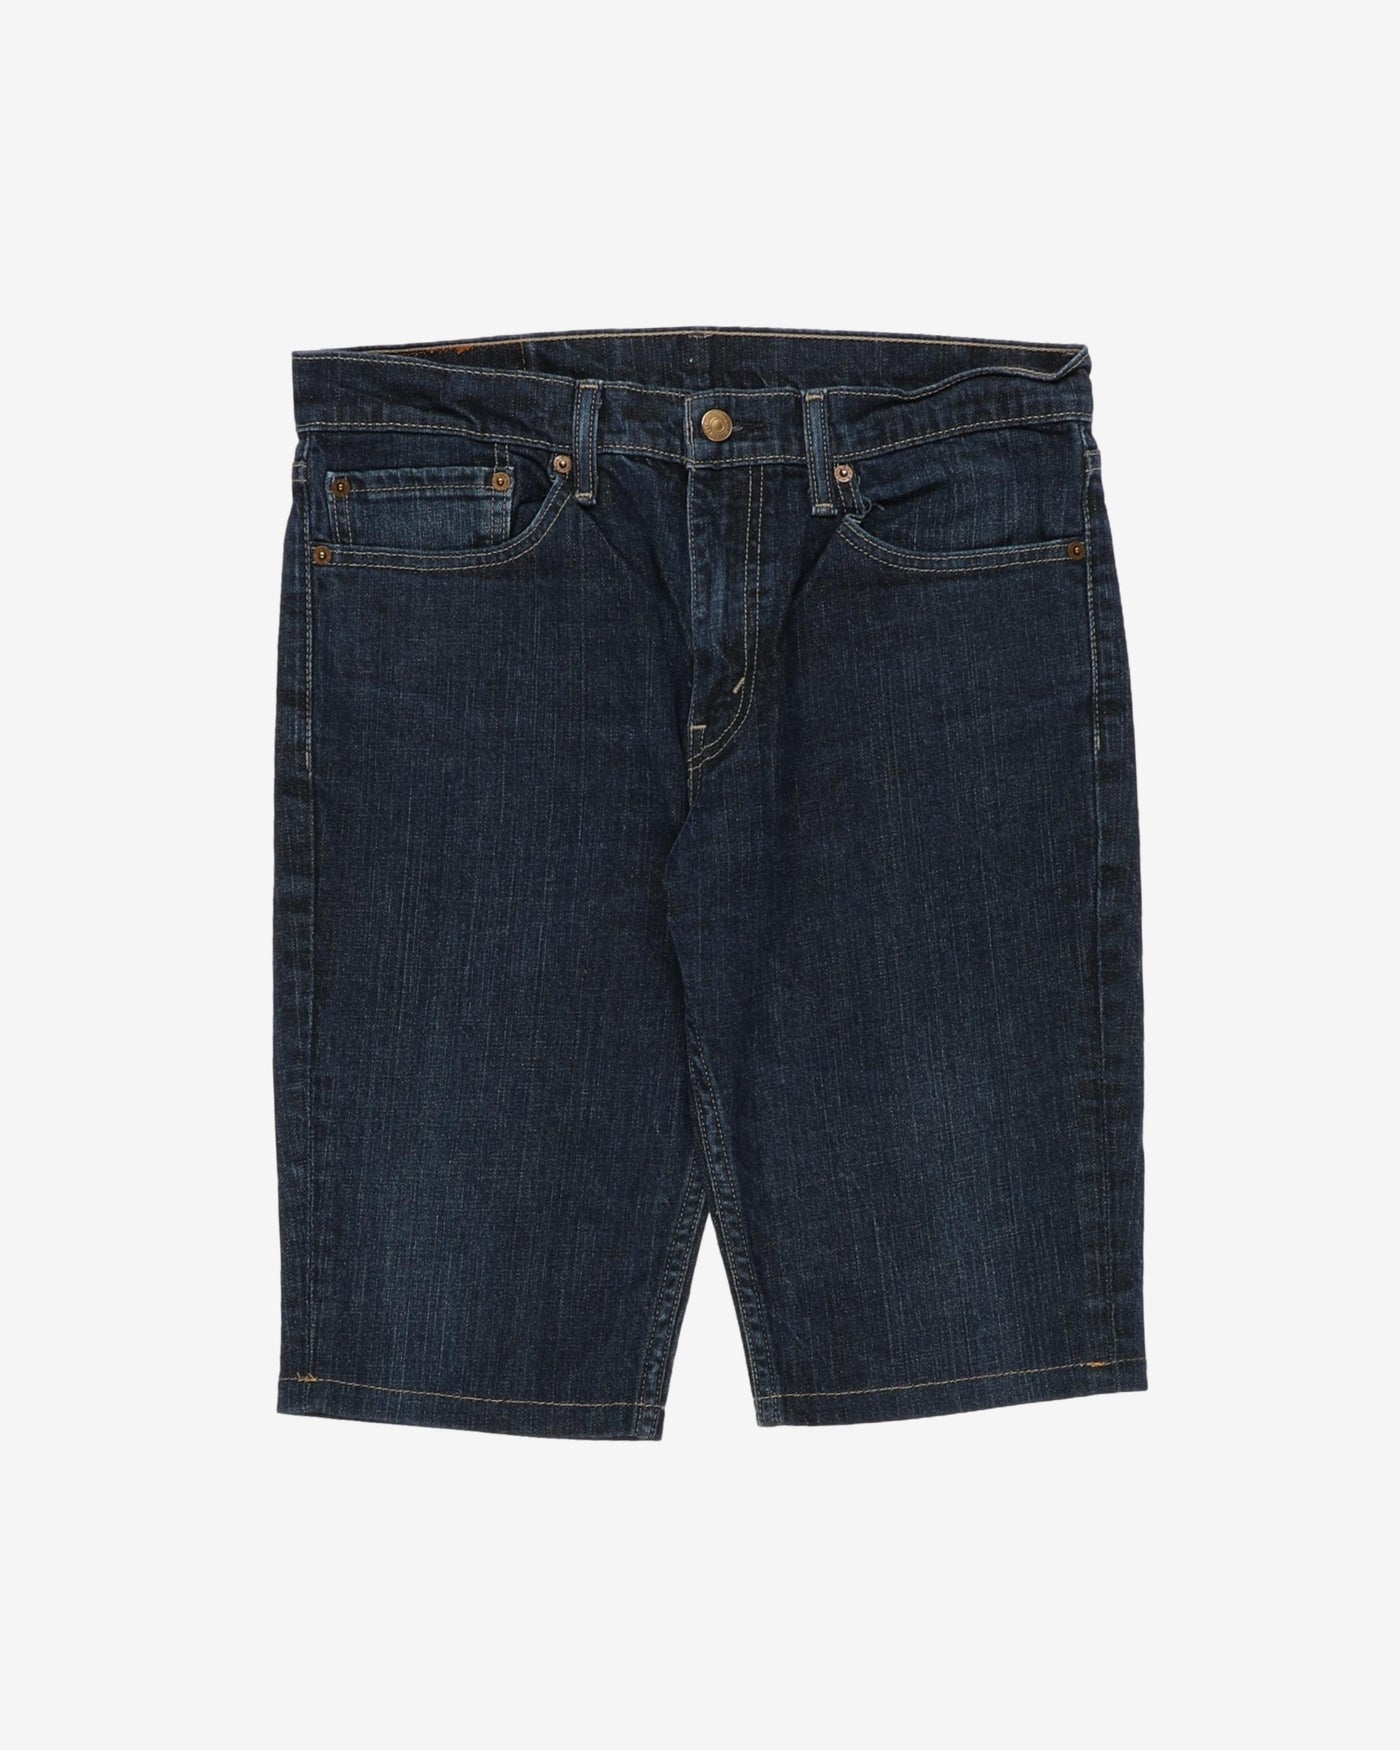 Levi's 511 Dark Blue Skinny Denim Jean Shorts - W33